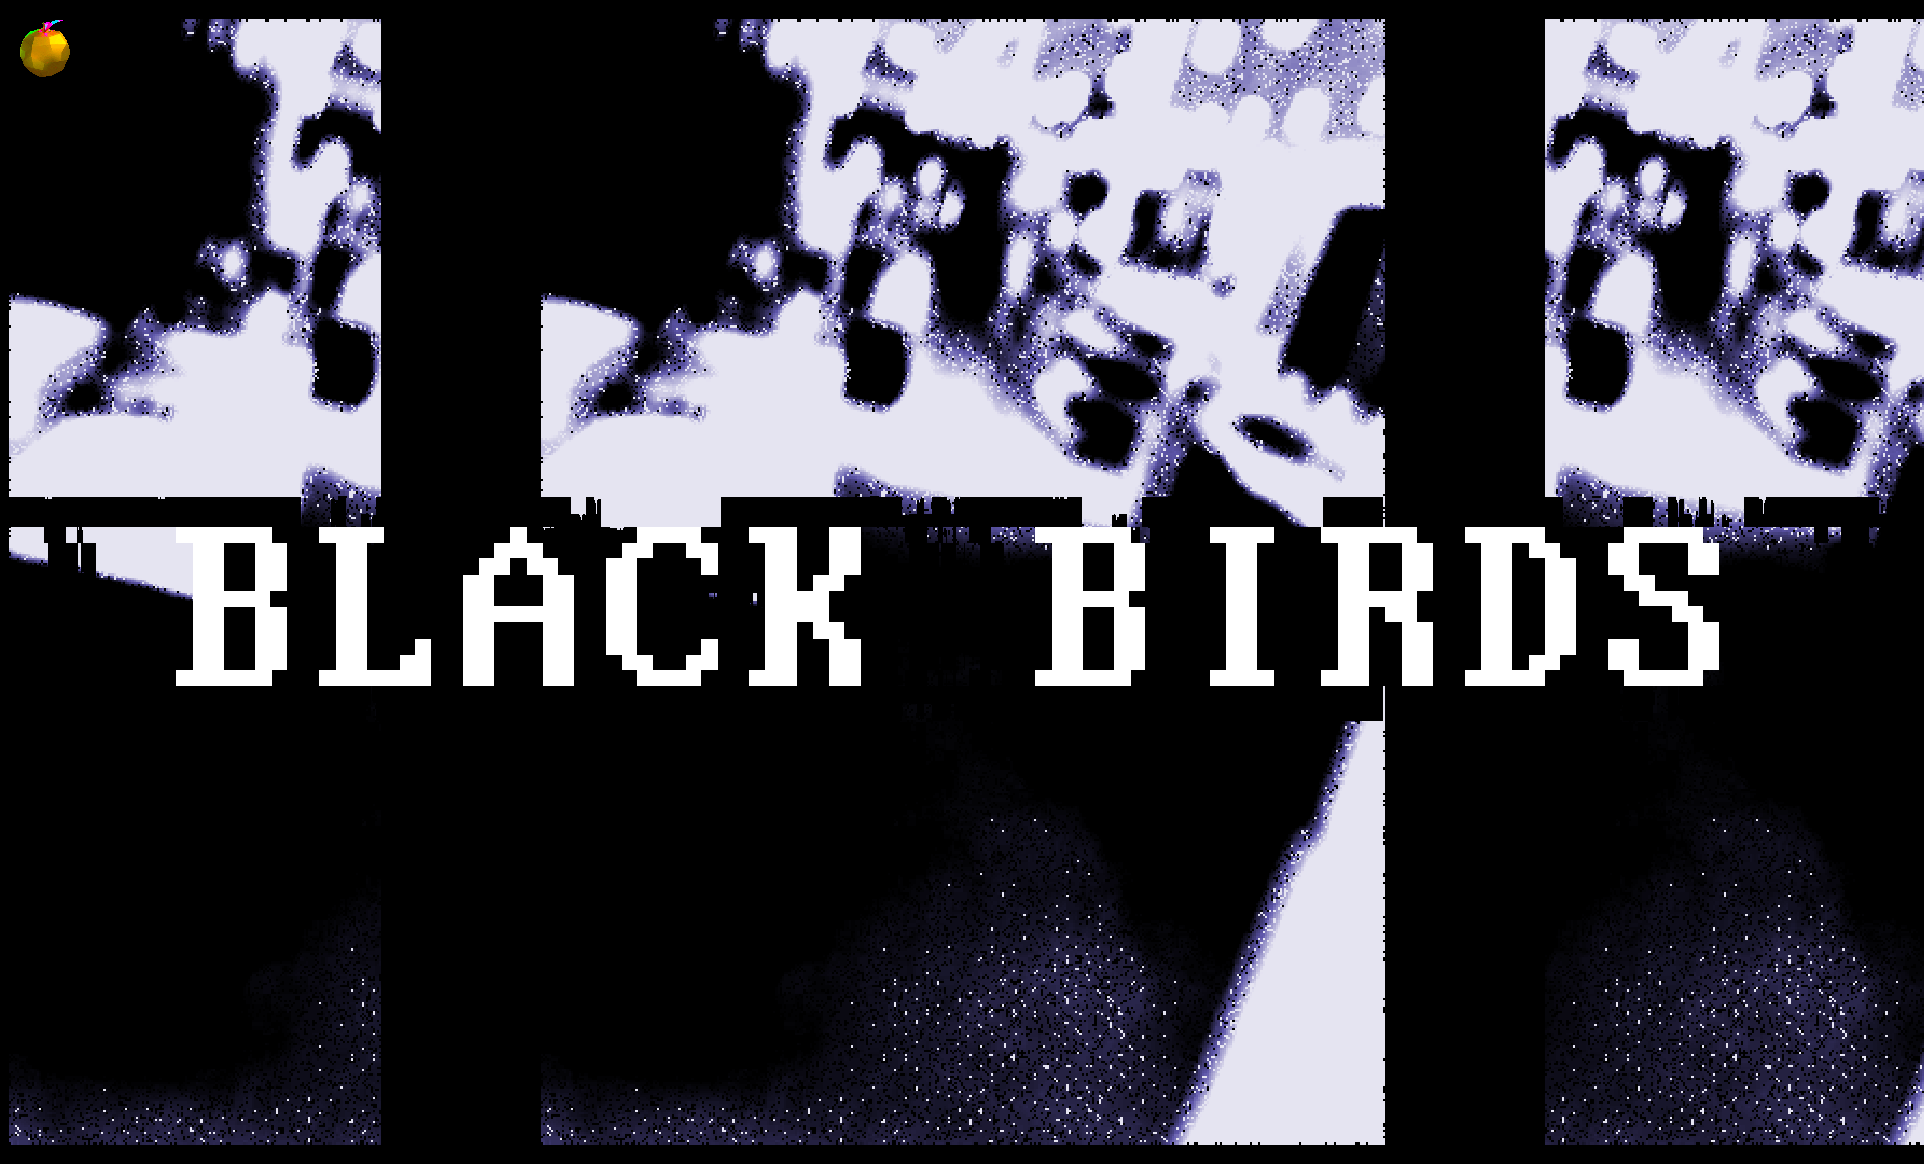 Black Birds